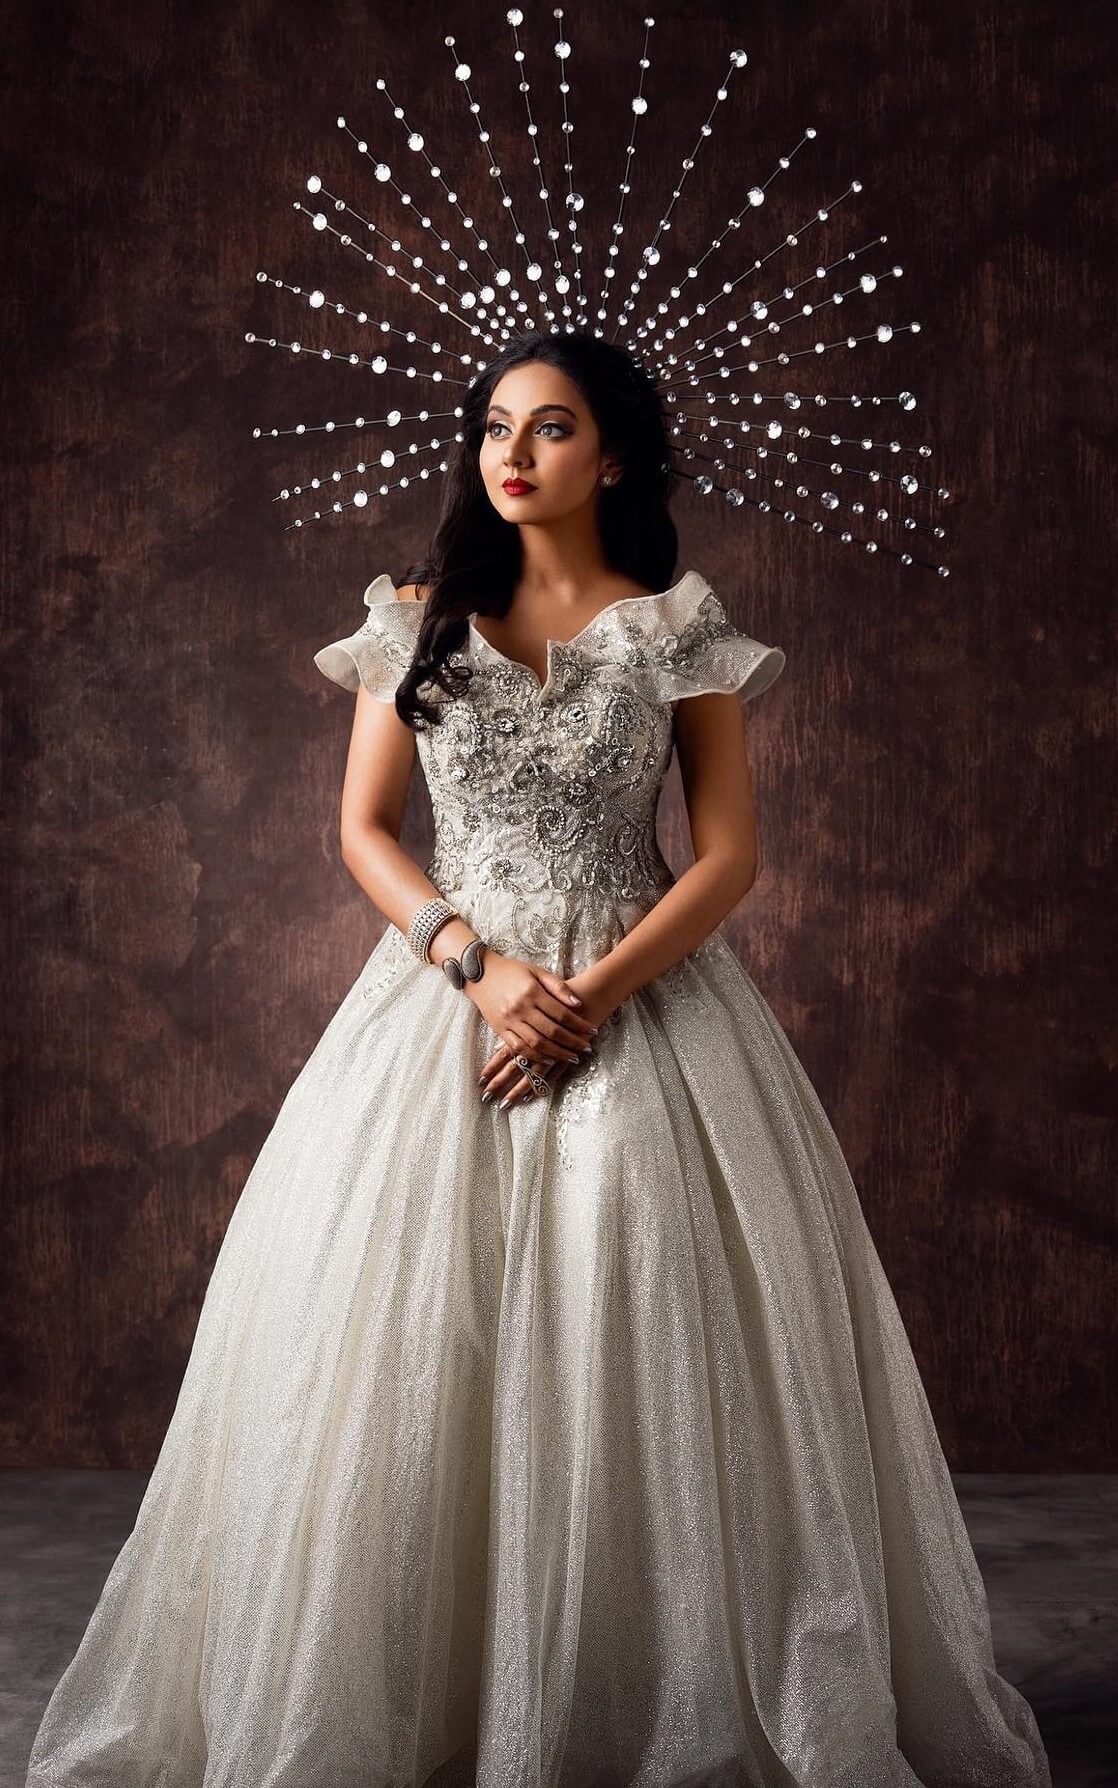 Vidya Pradeep In Ivory Bridal Gown Gives Us Princess Vibes